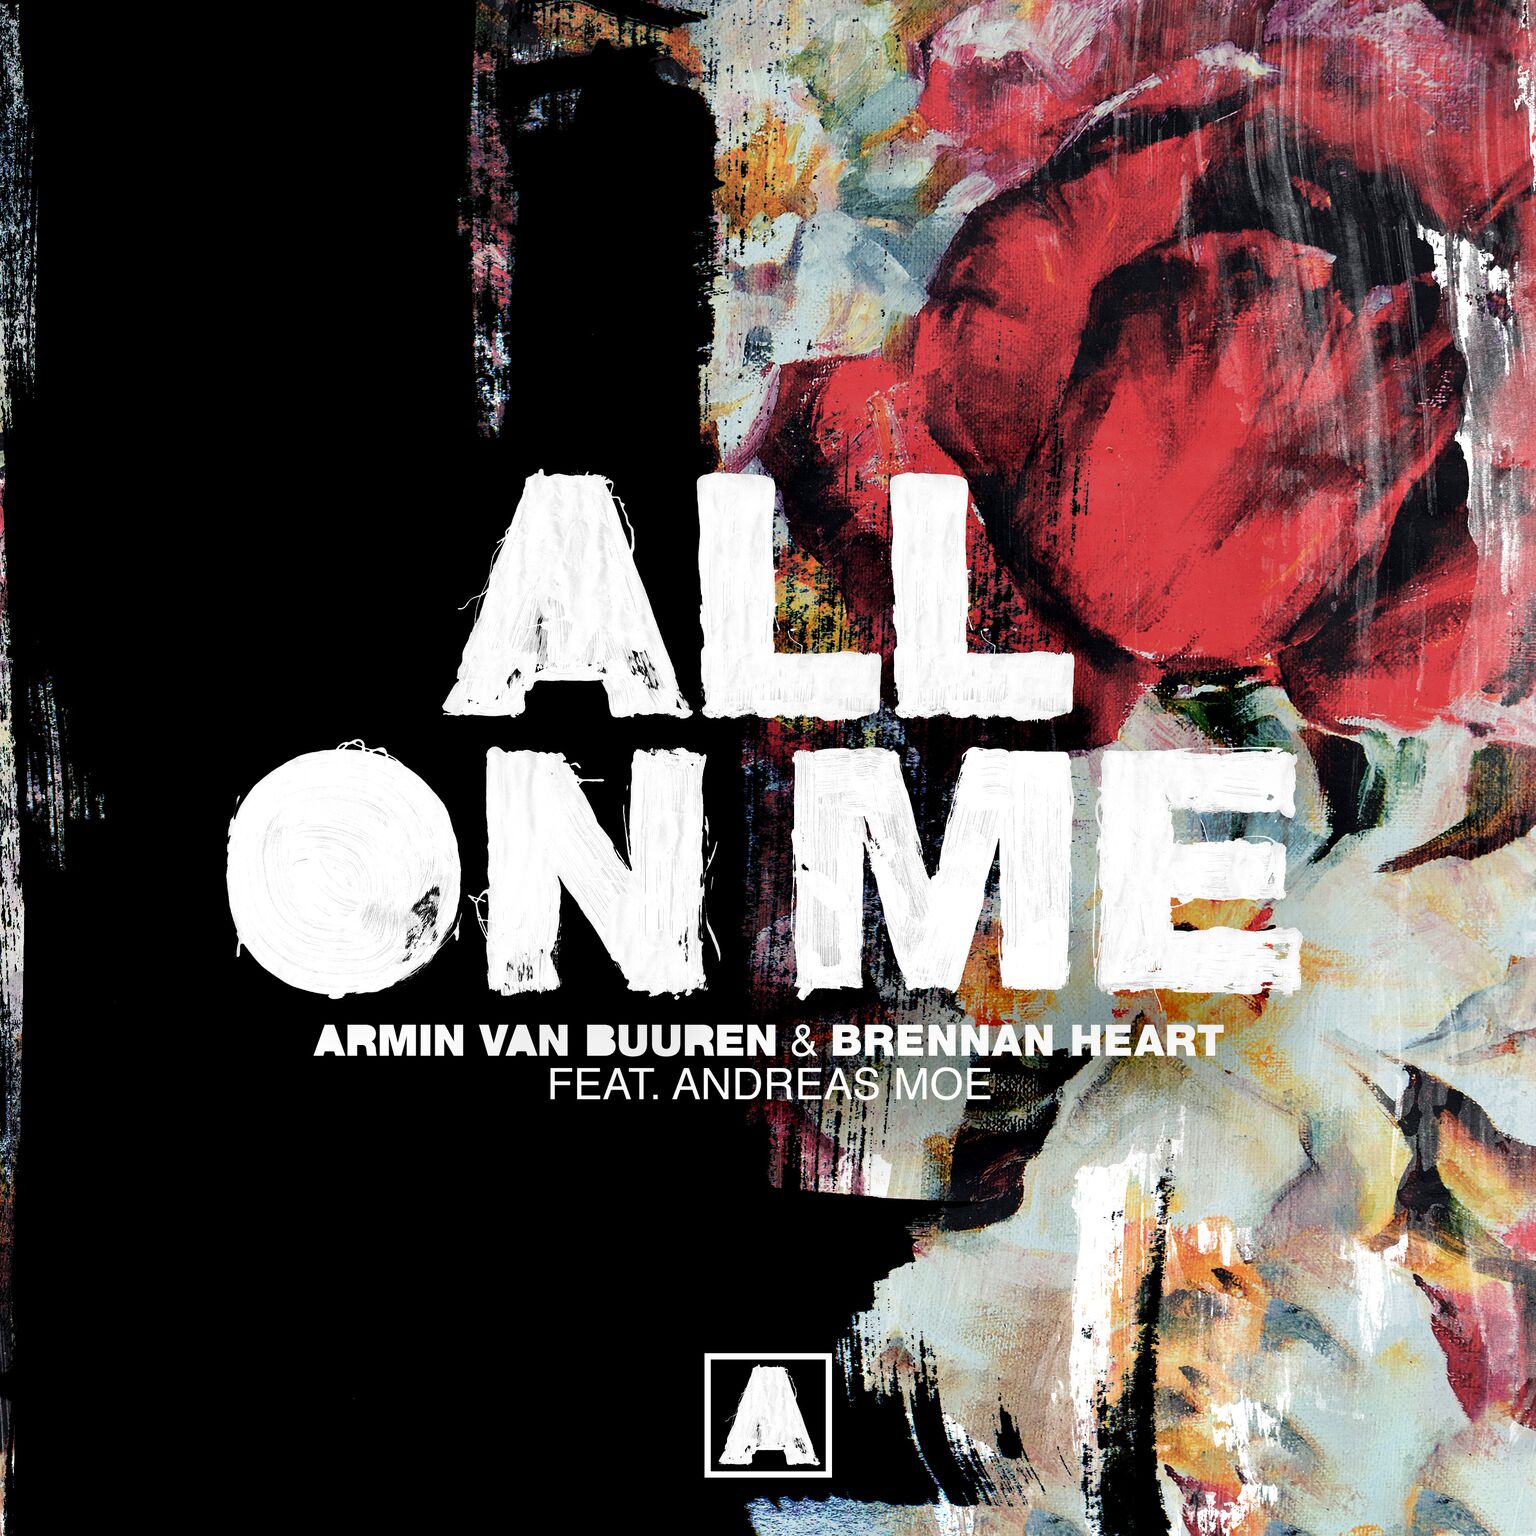 Armin van Buuren and Brennan Heart feat. Andreas Moe presents All On Me on Armada Music